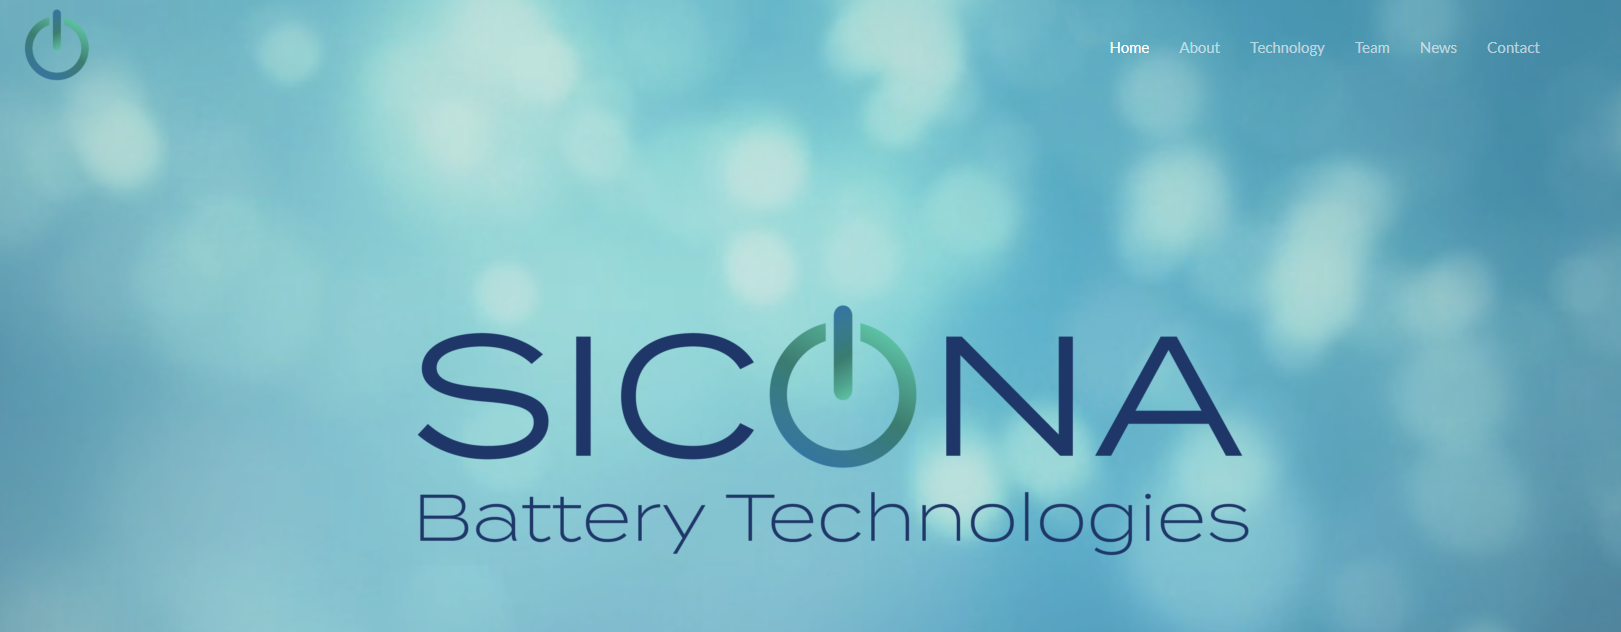 Sicona Battery Technologies Raises $22 Million in Series A Funding